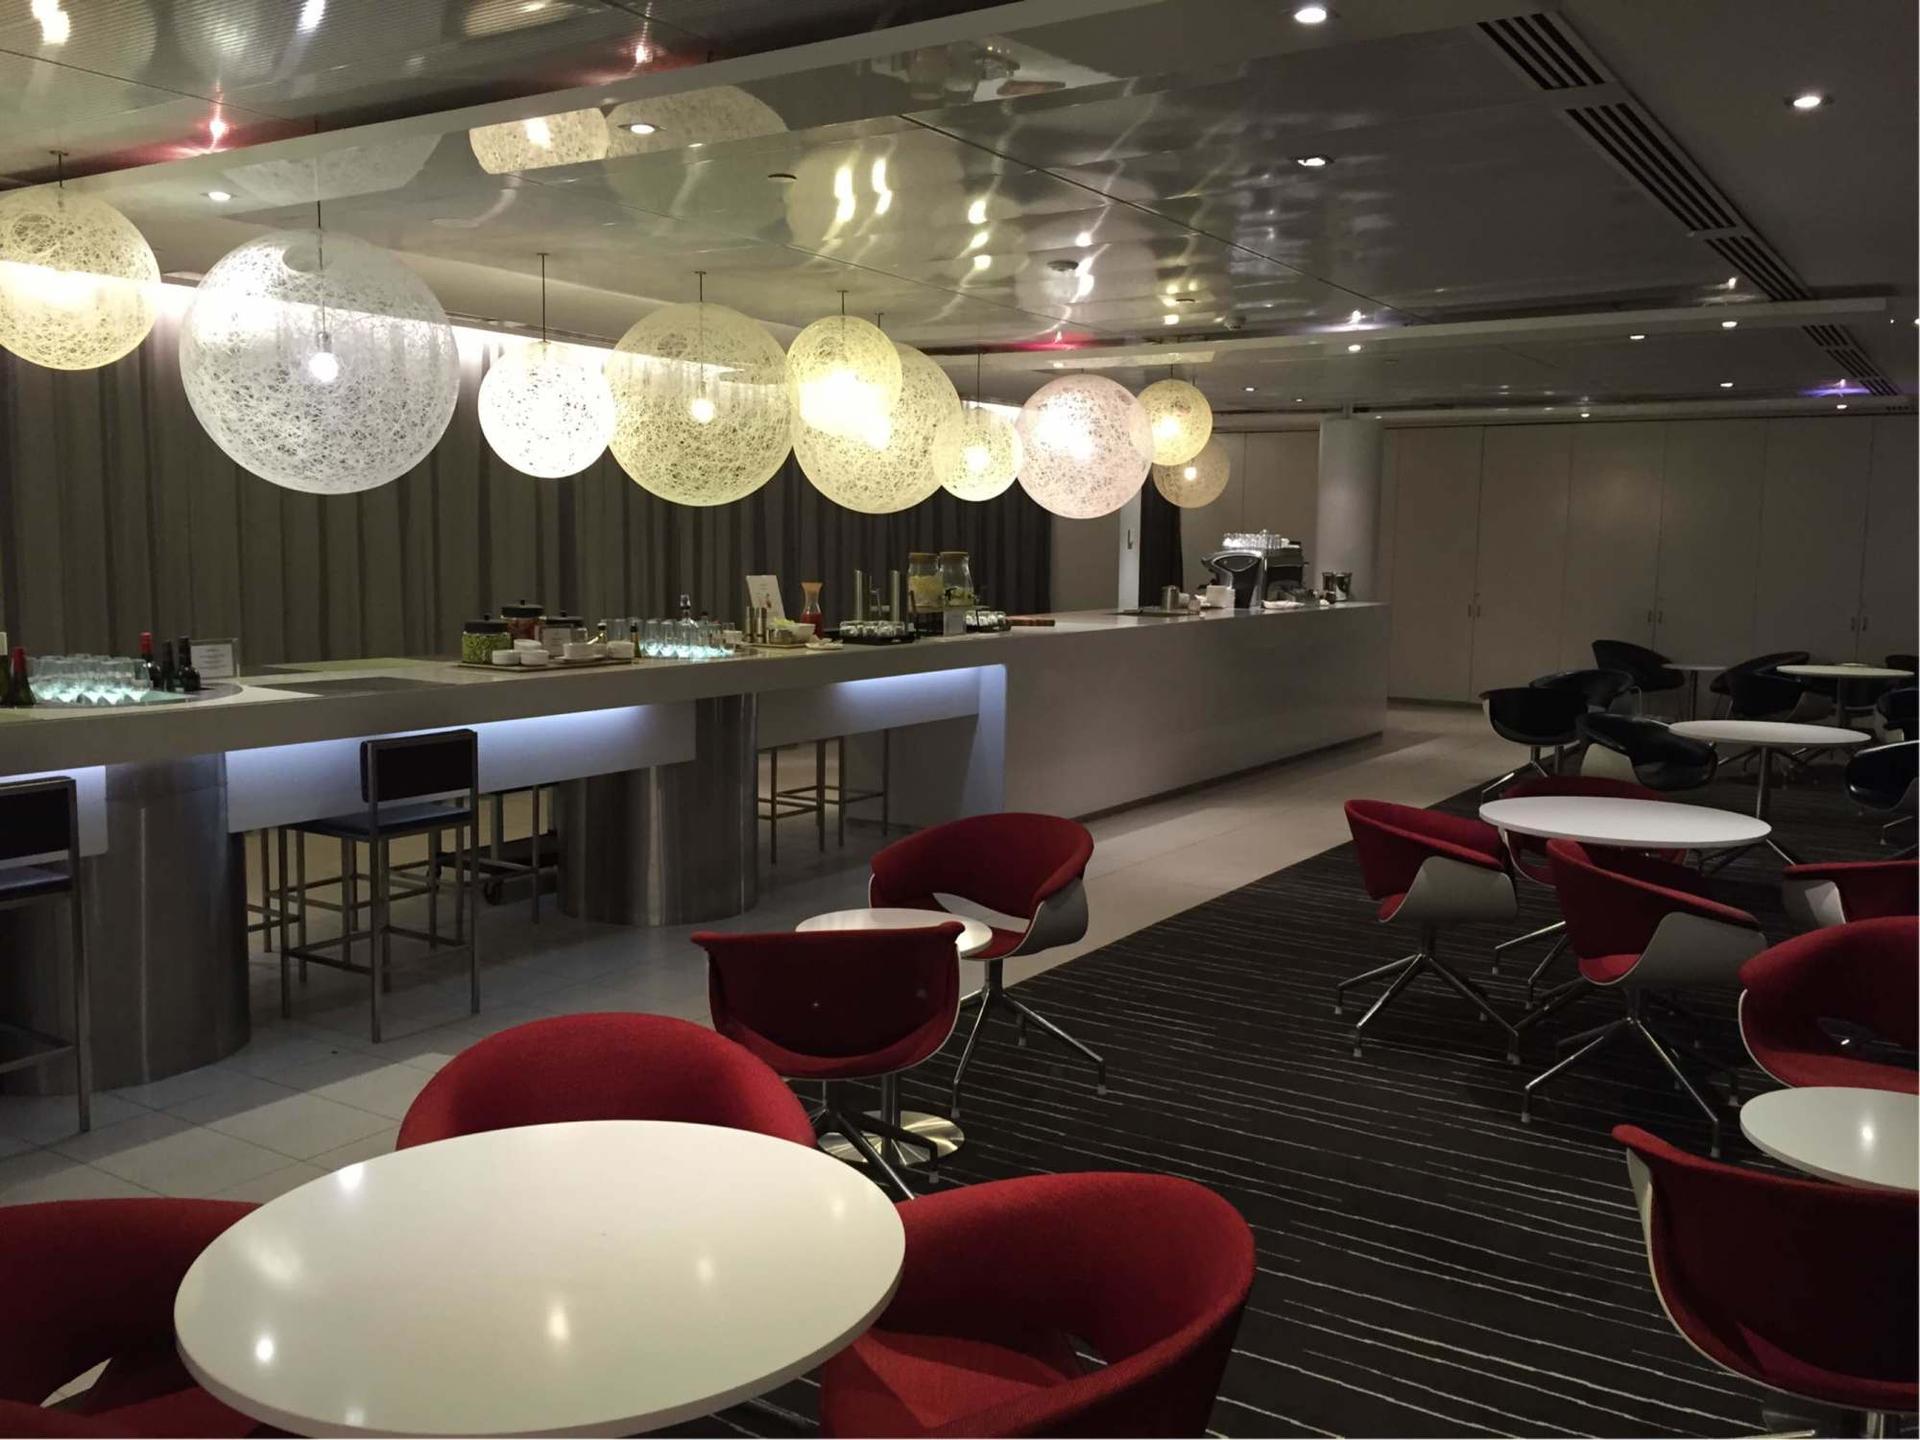 Qantas Airways International Business Lounge image 1 of 17